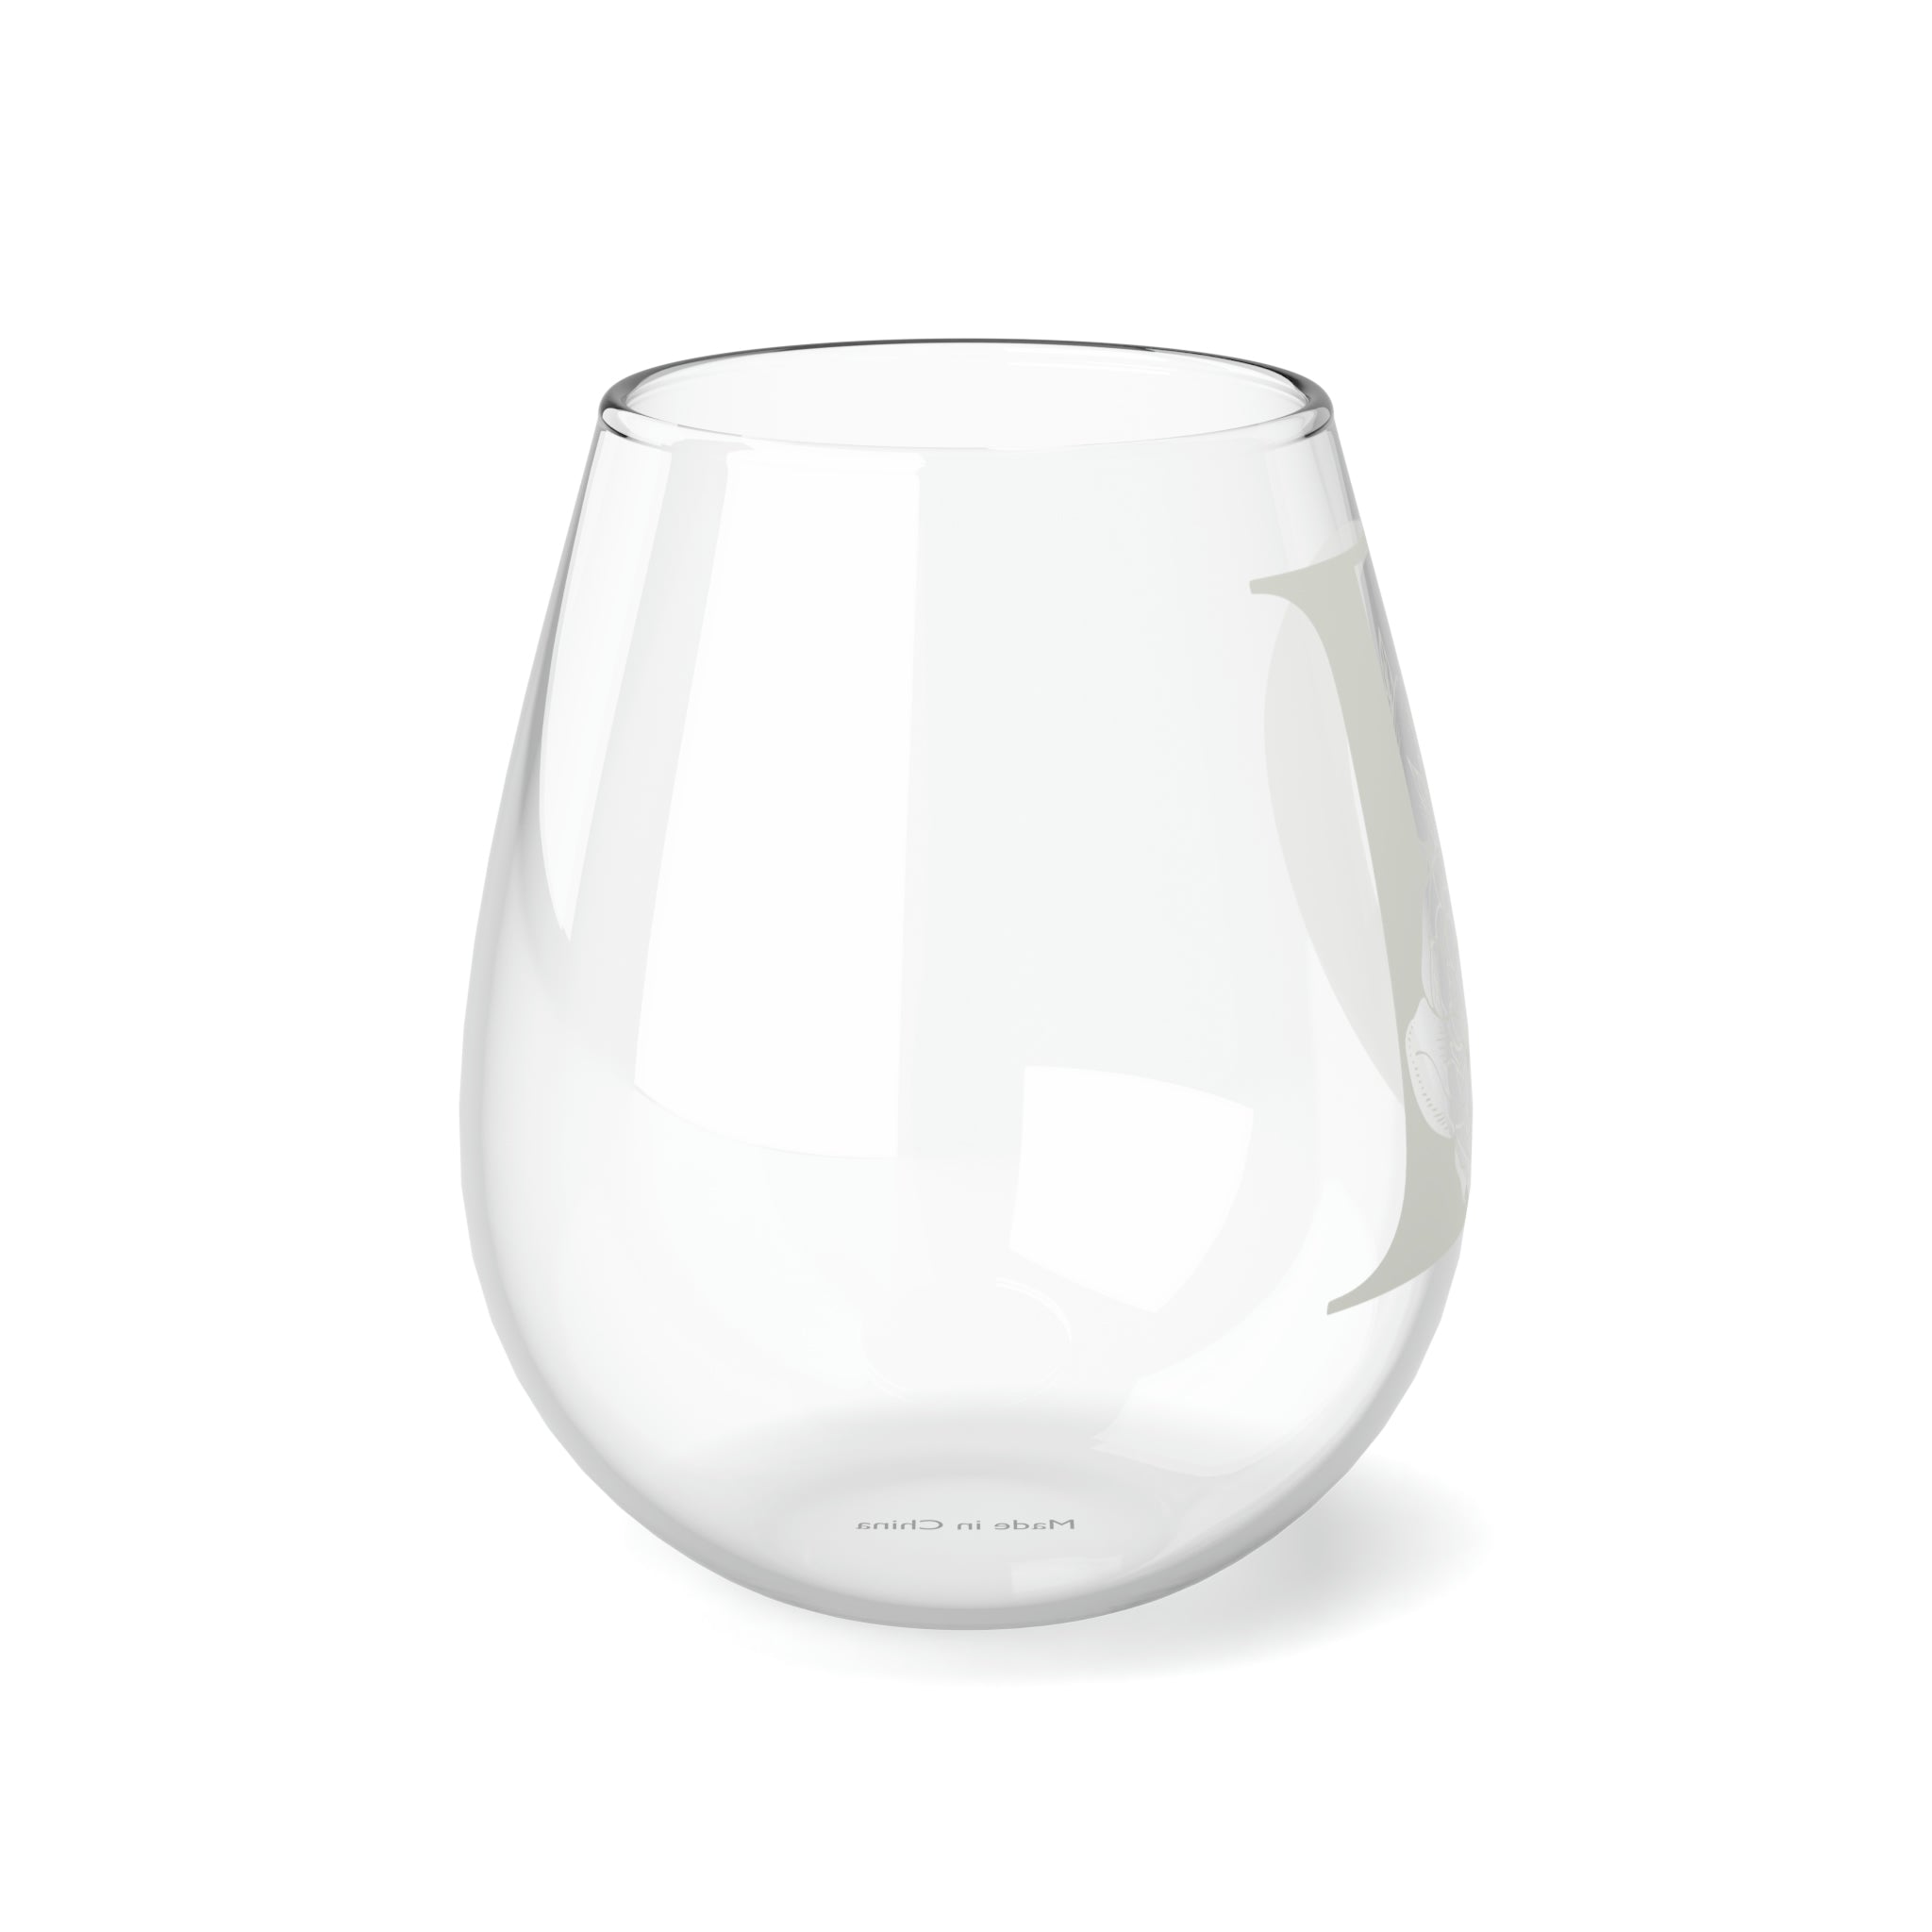 Stemless Wine Glass, 11.75oz - Monogram D